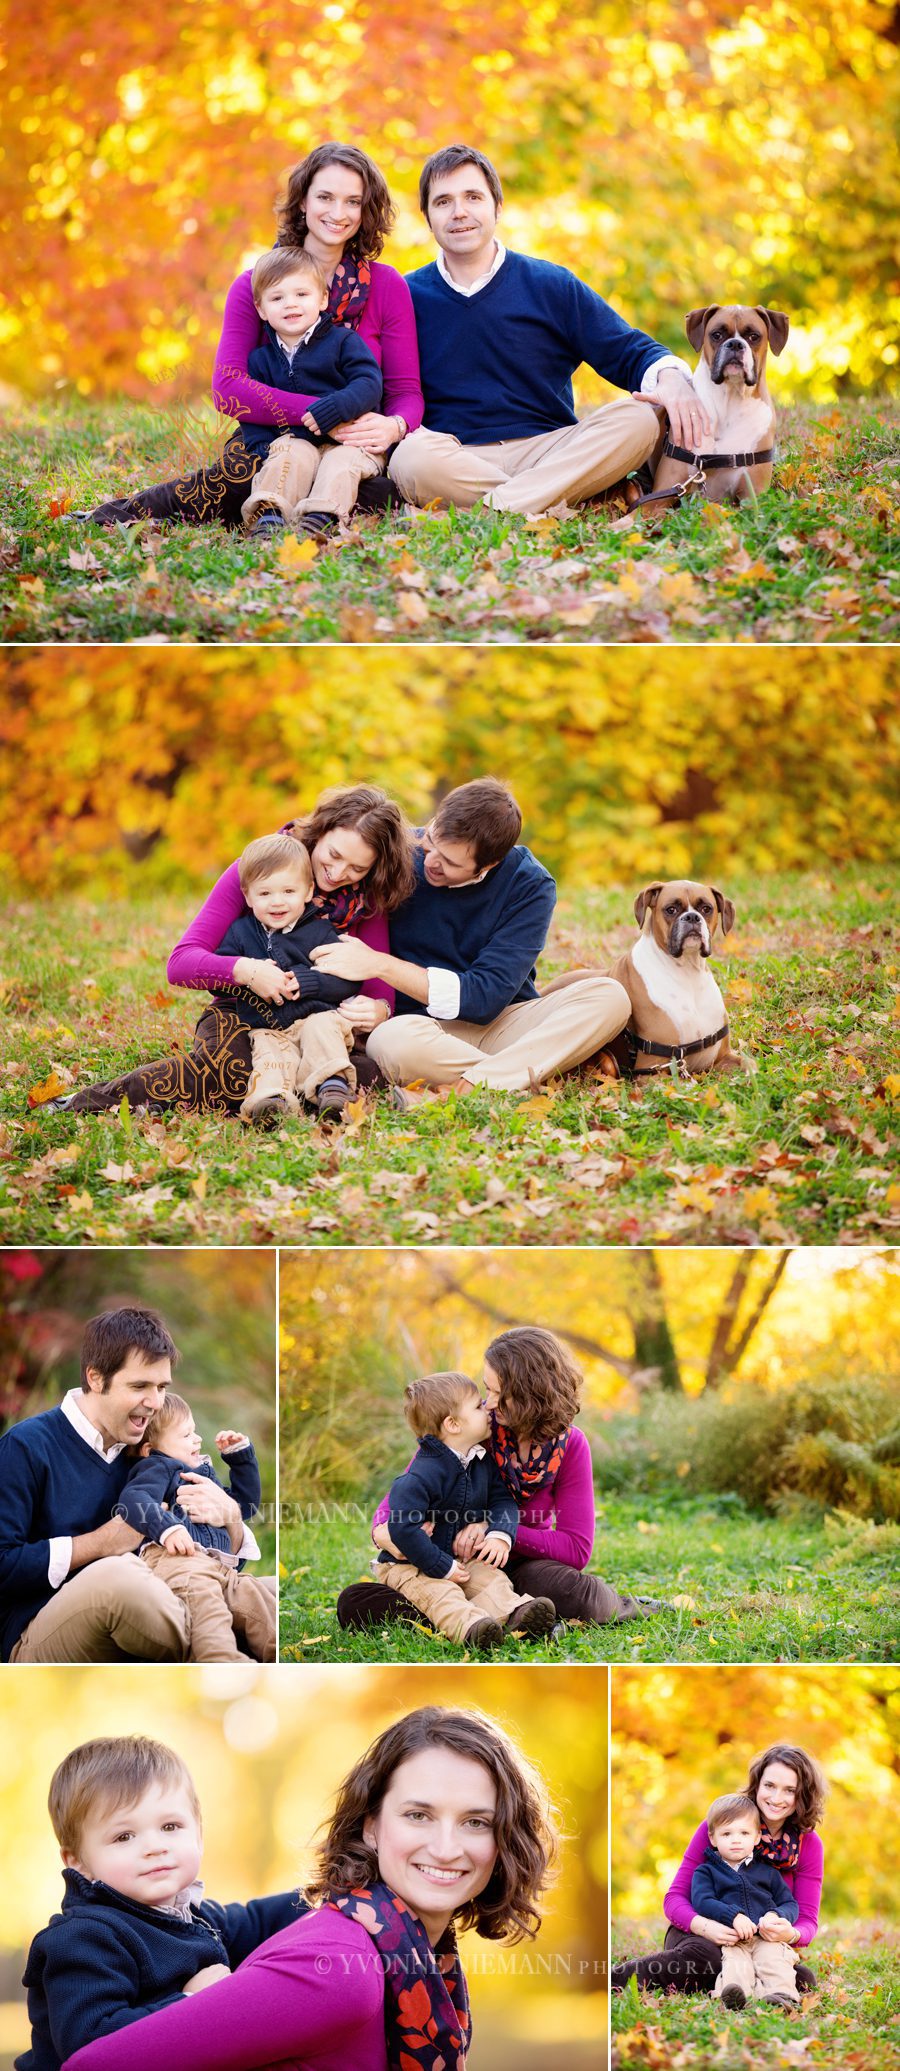 fun autumn family portraits in Athens, GA by Yvonne Niemann Photography